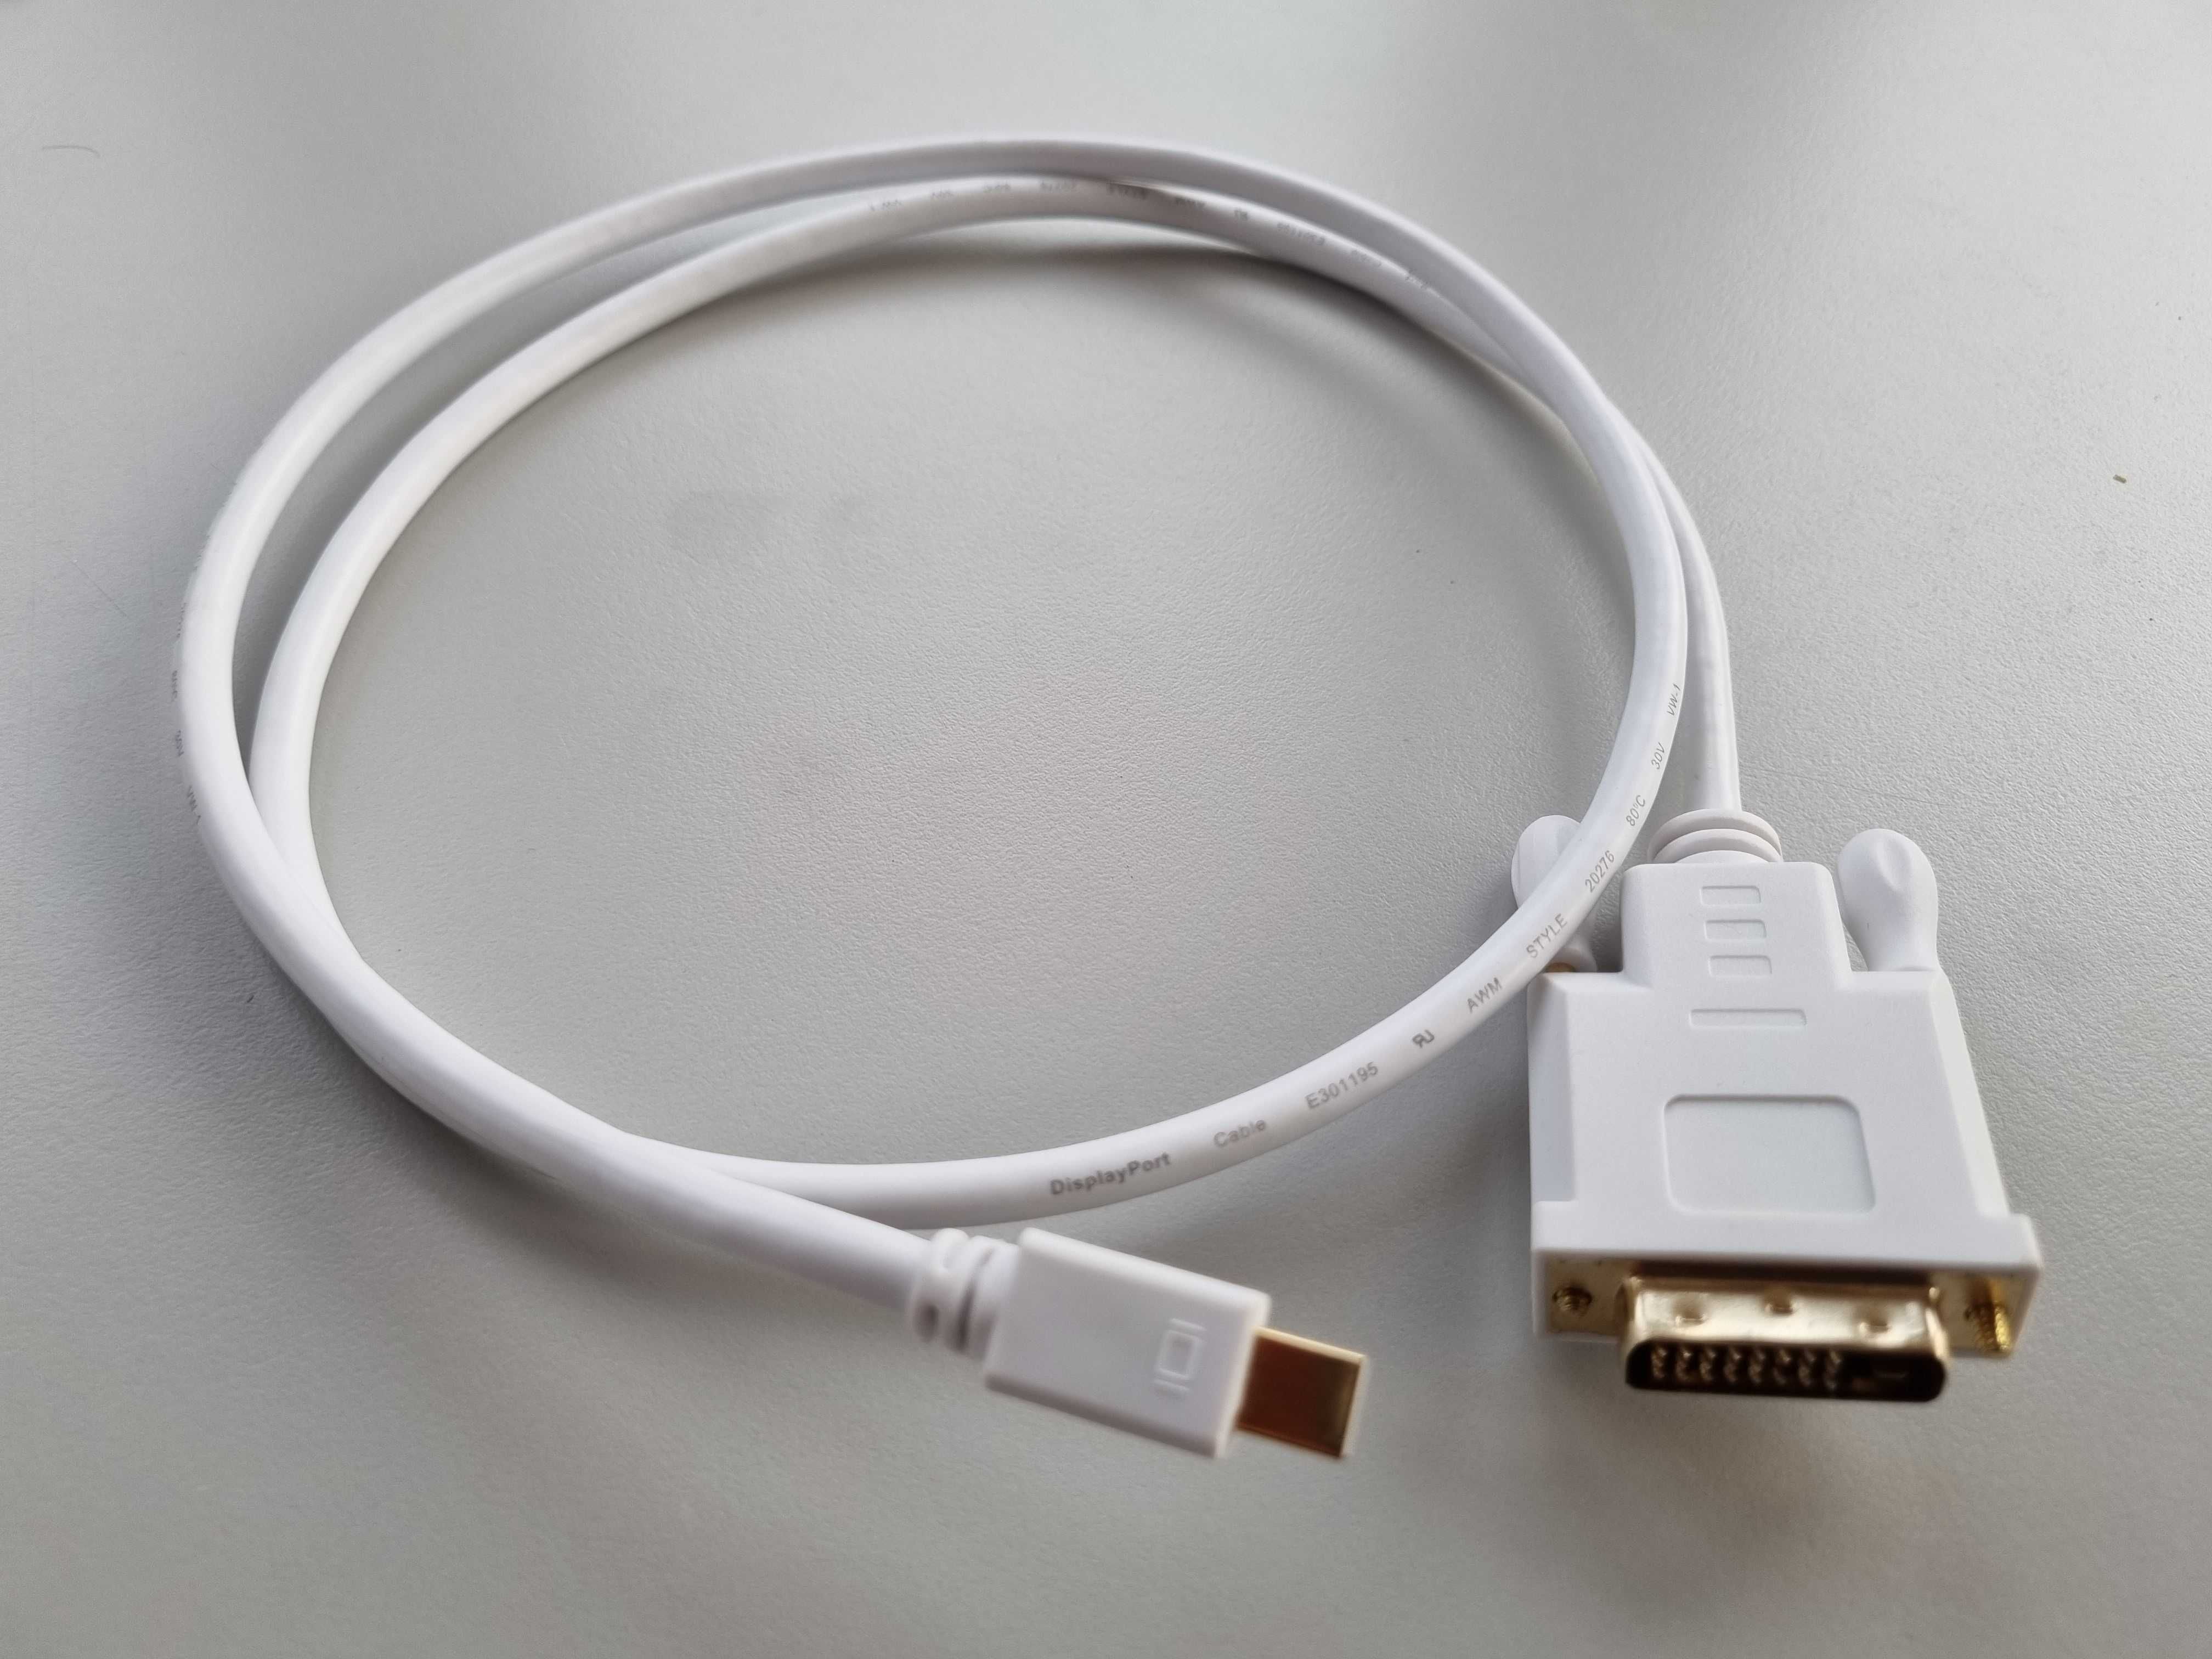 Cablu mini Display Port la DVI si VGA